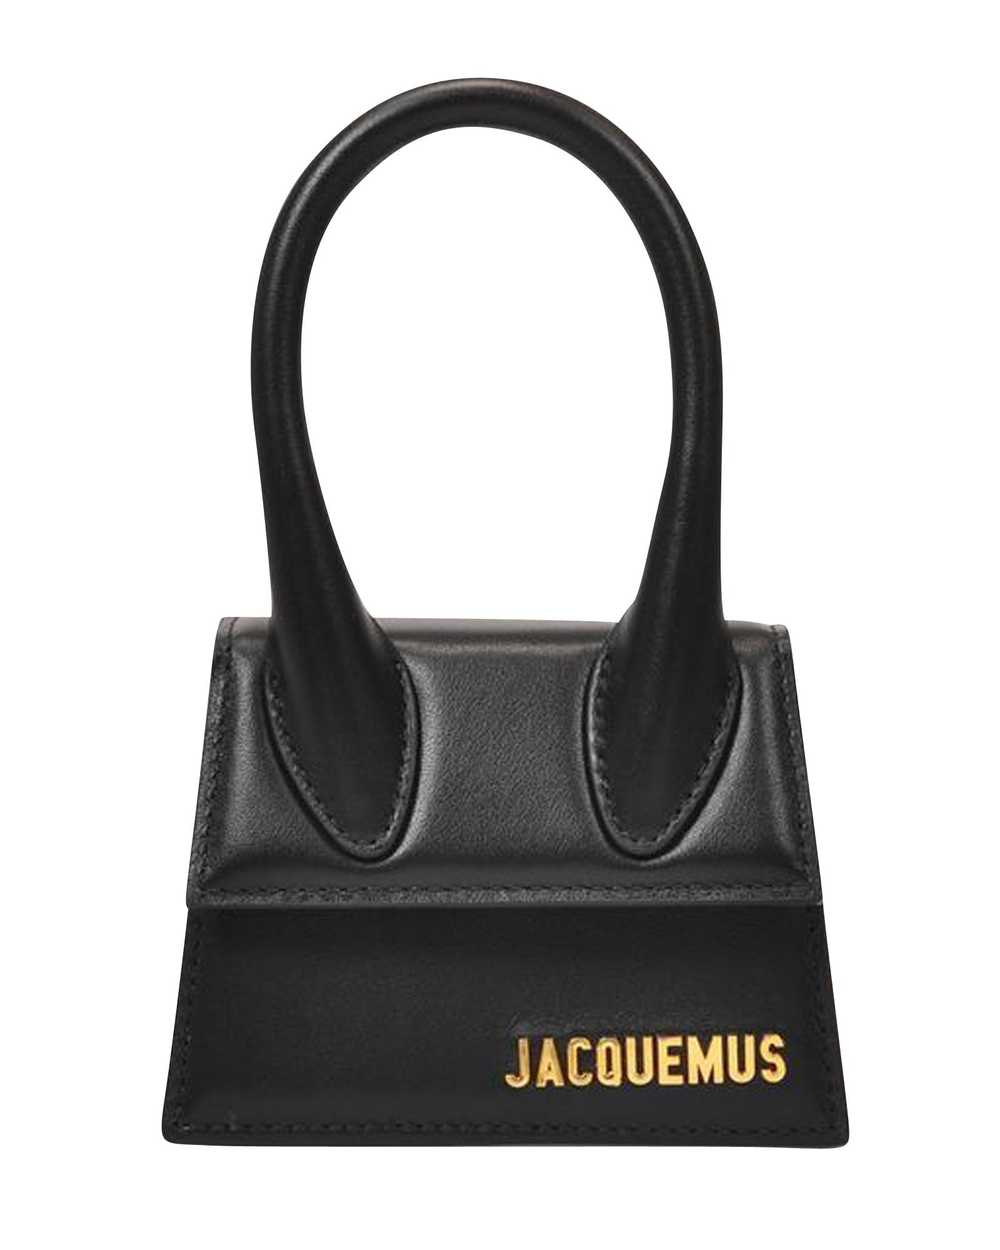 Product Details Black Leather Le Chiquito Bag - image 4